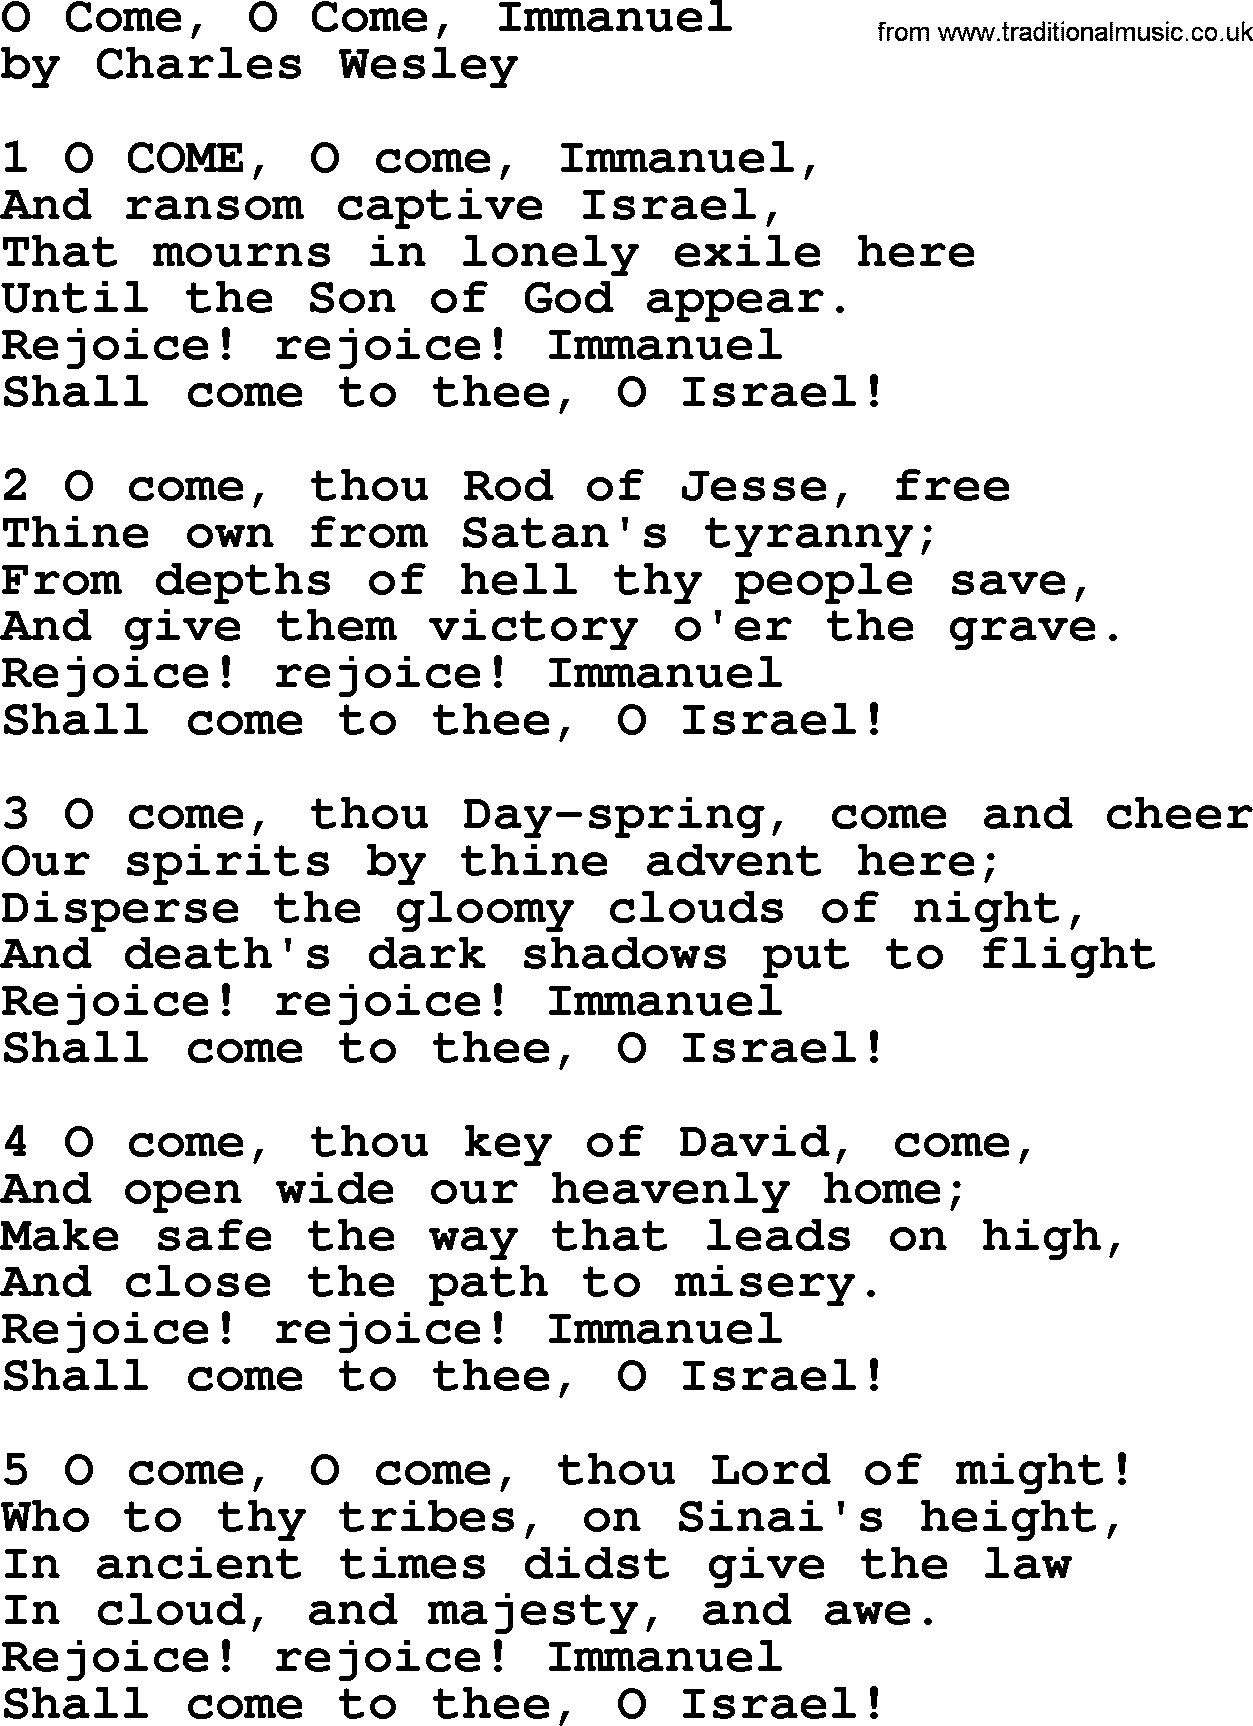 Charles Wesley hymn: O Come, O Come, Immanuel, lyrics